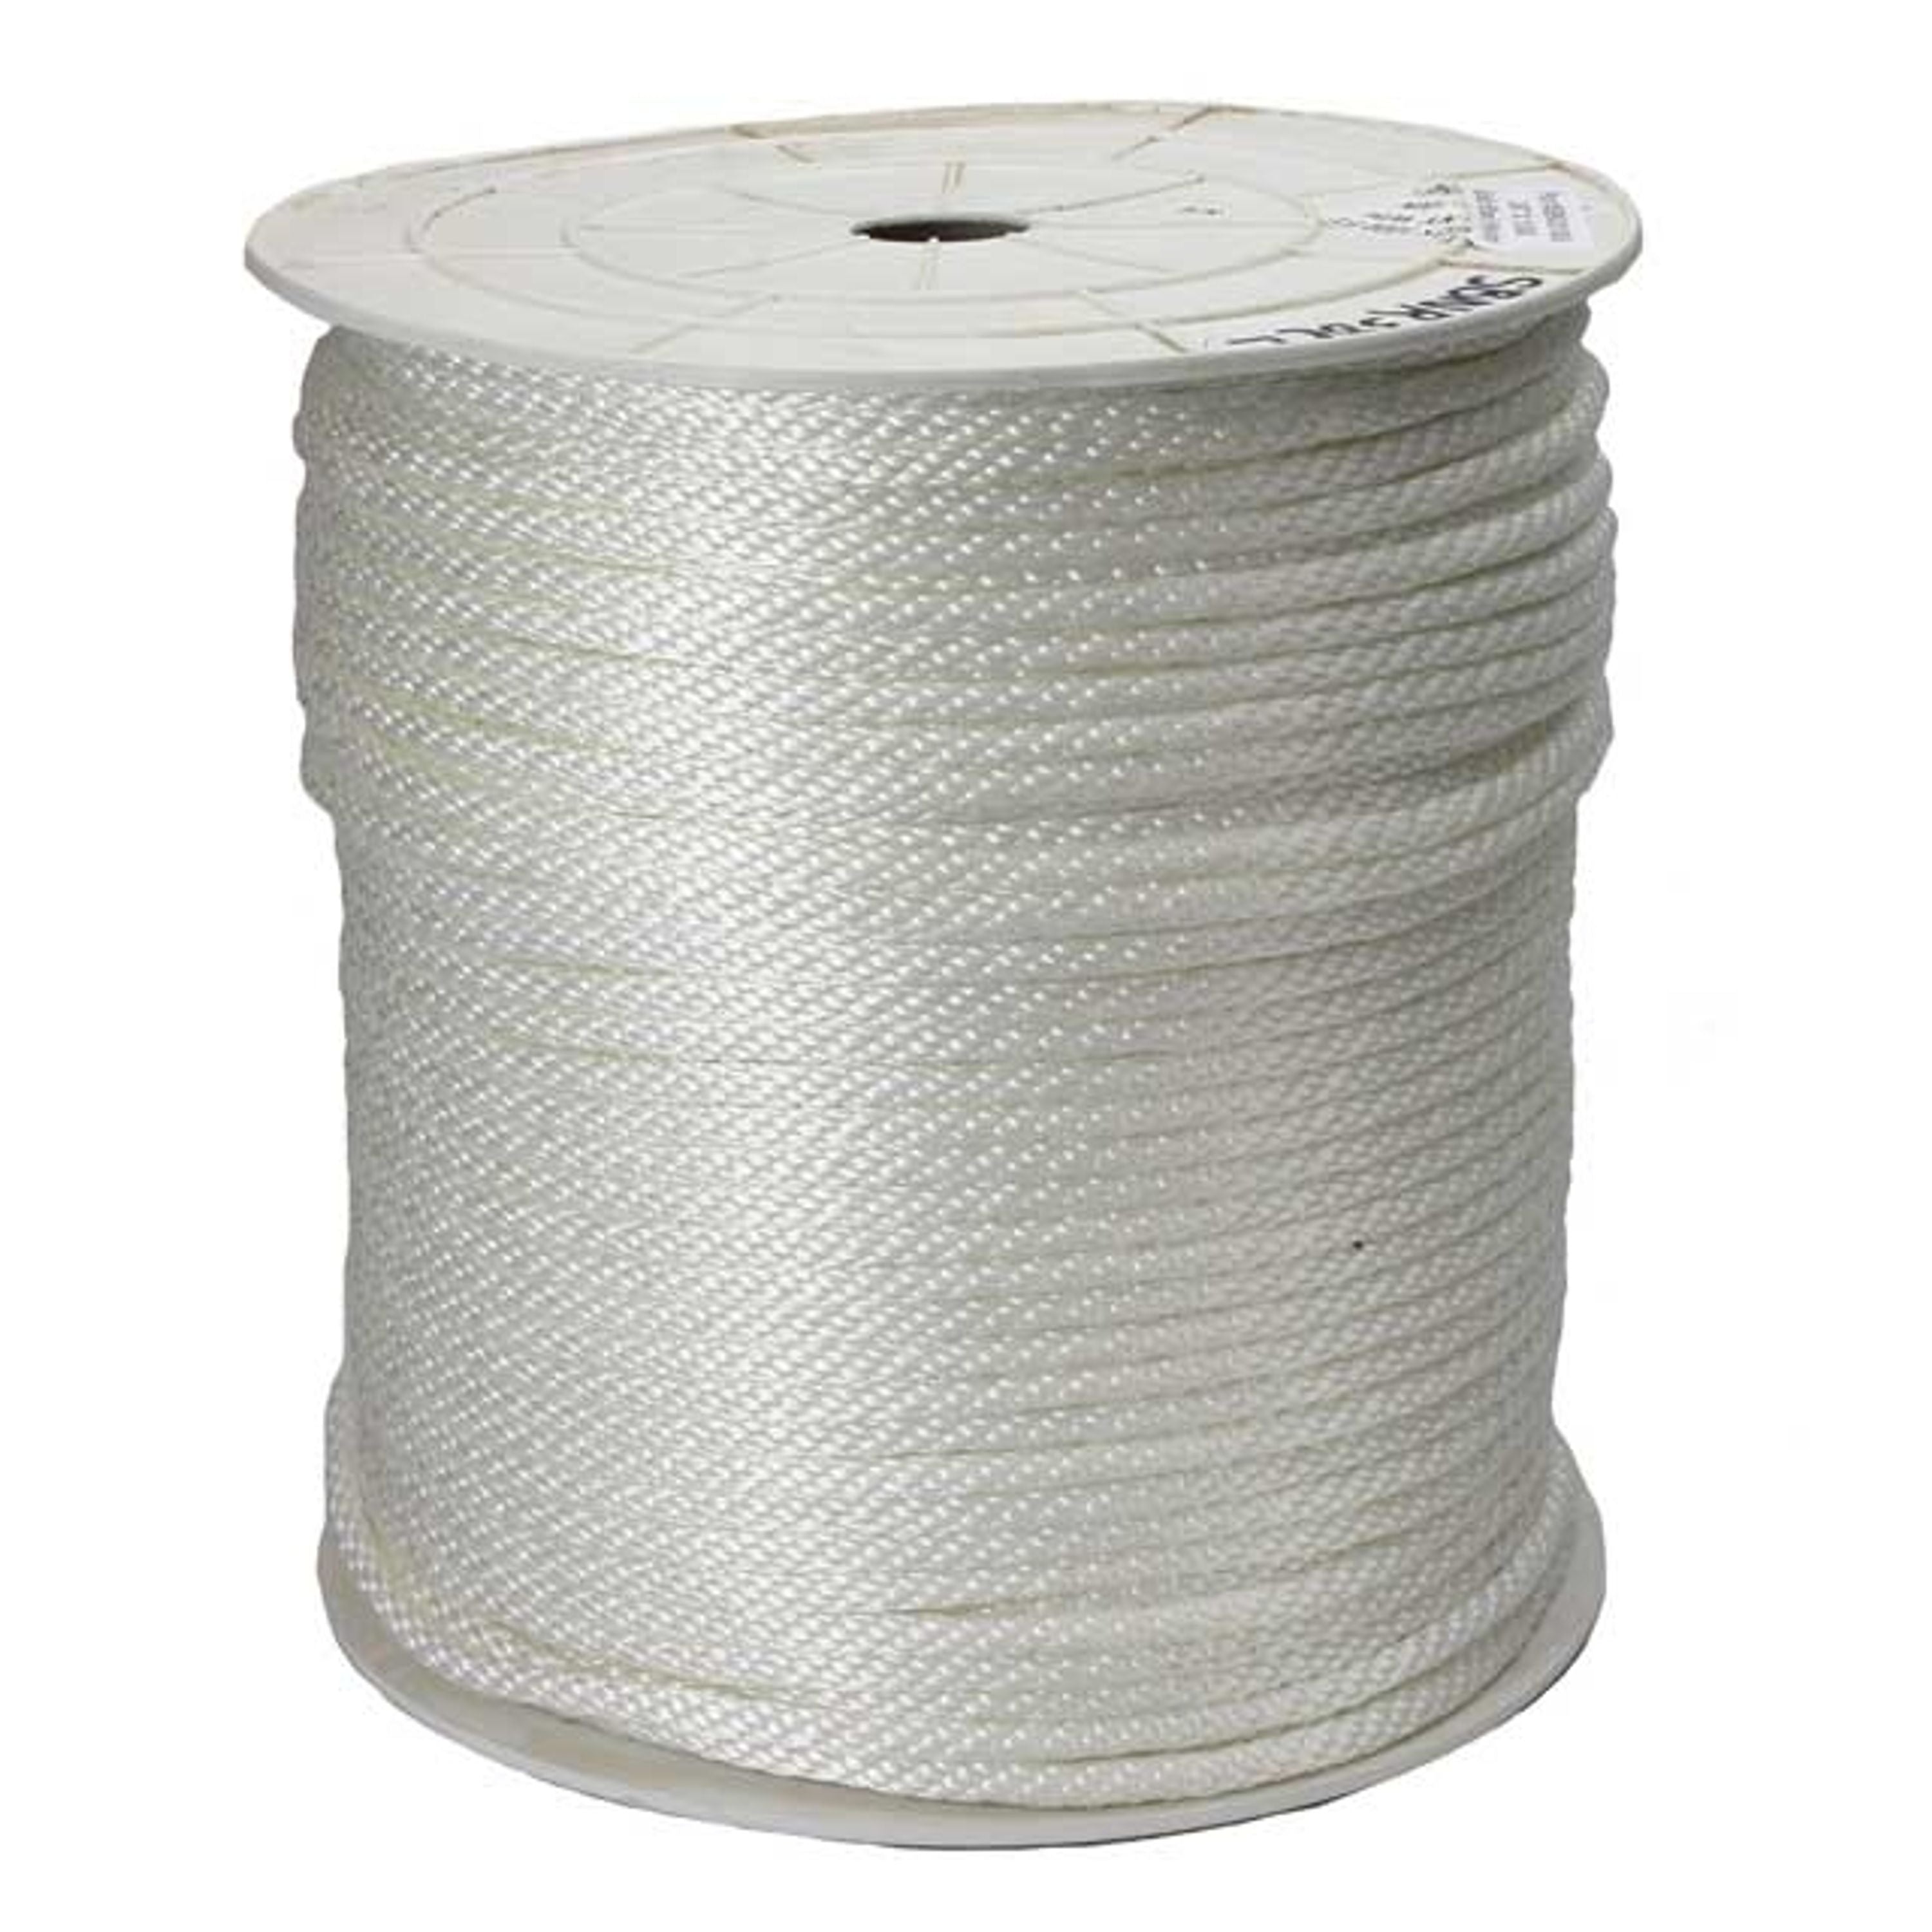 Solid Braided Nylon Rope - 3/16 x 500', White S-17650 - Uline